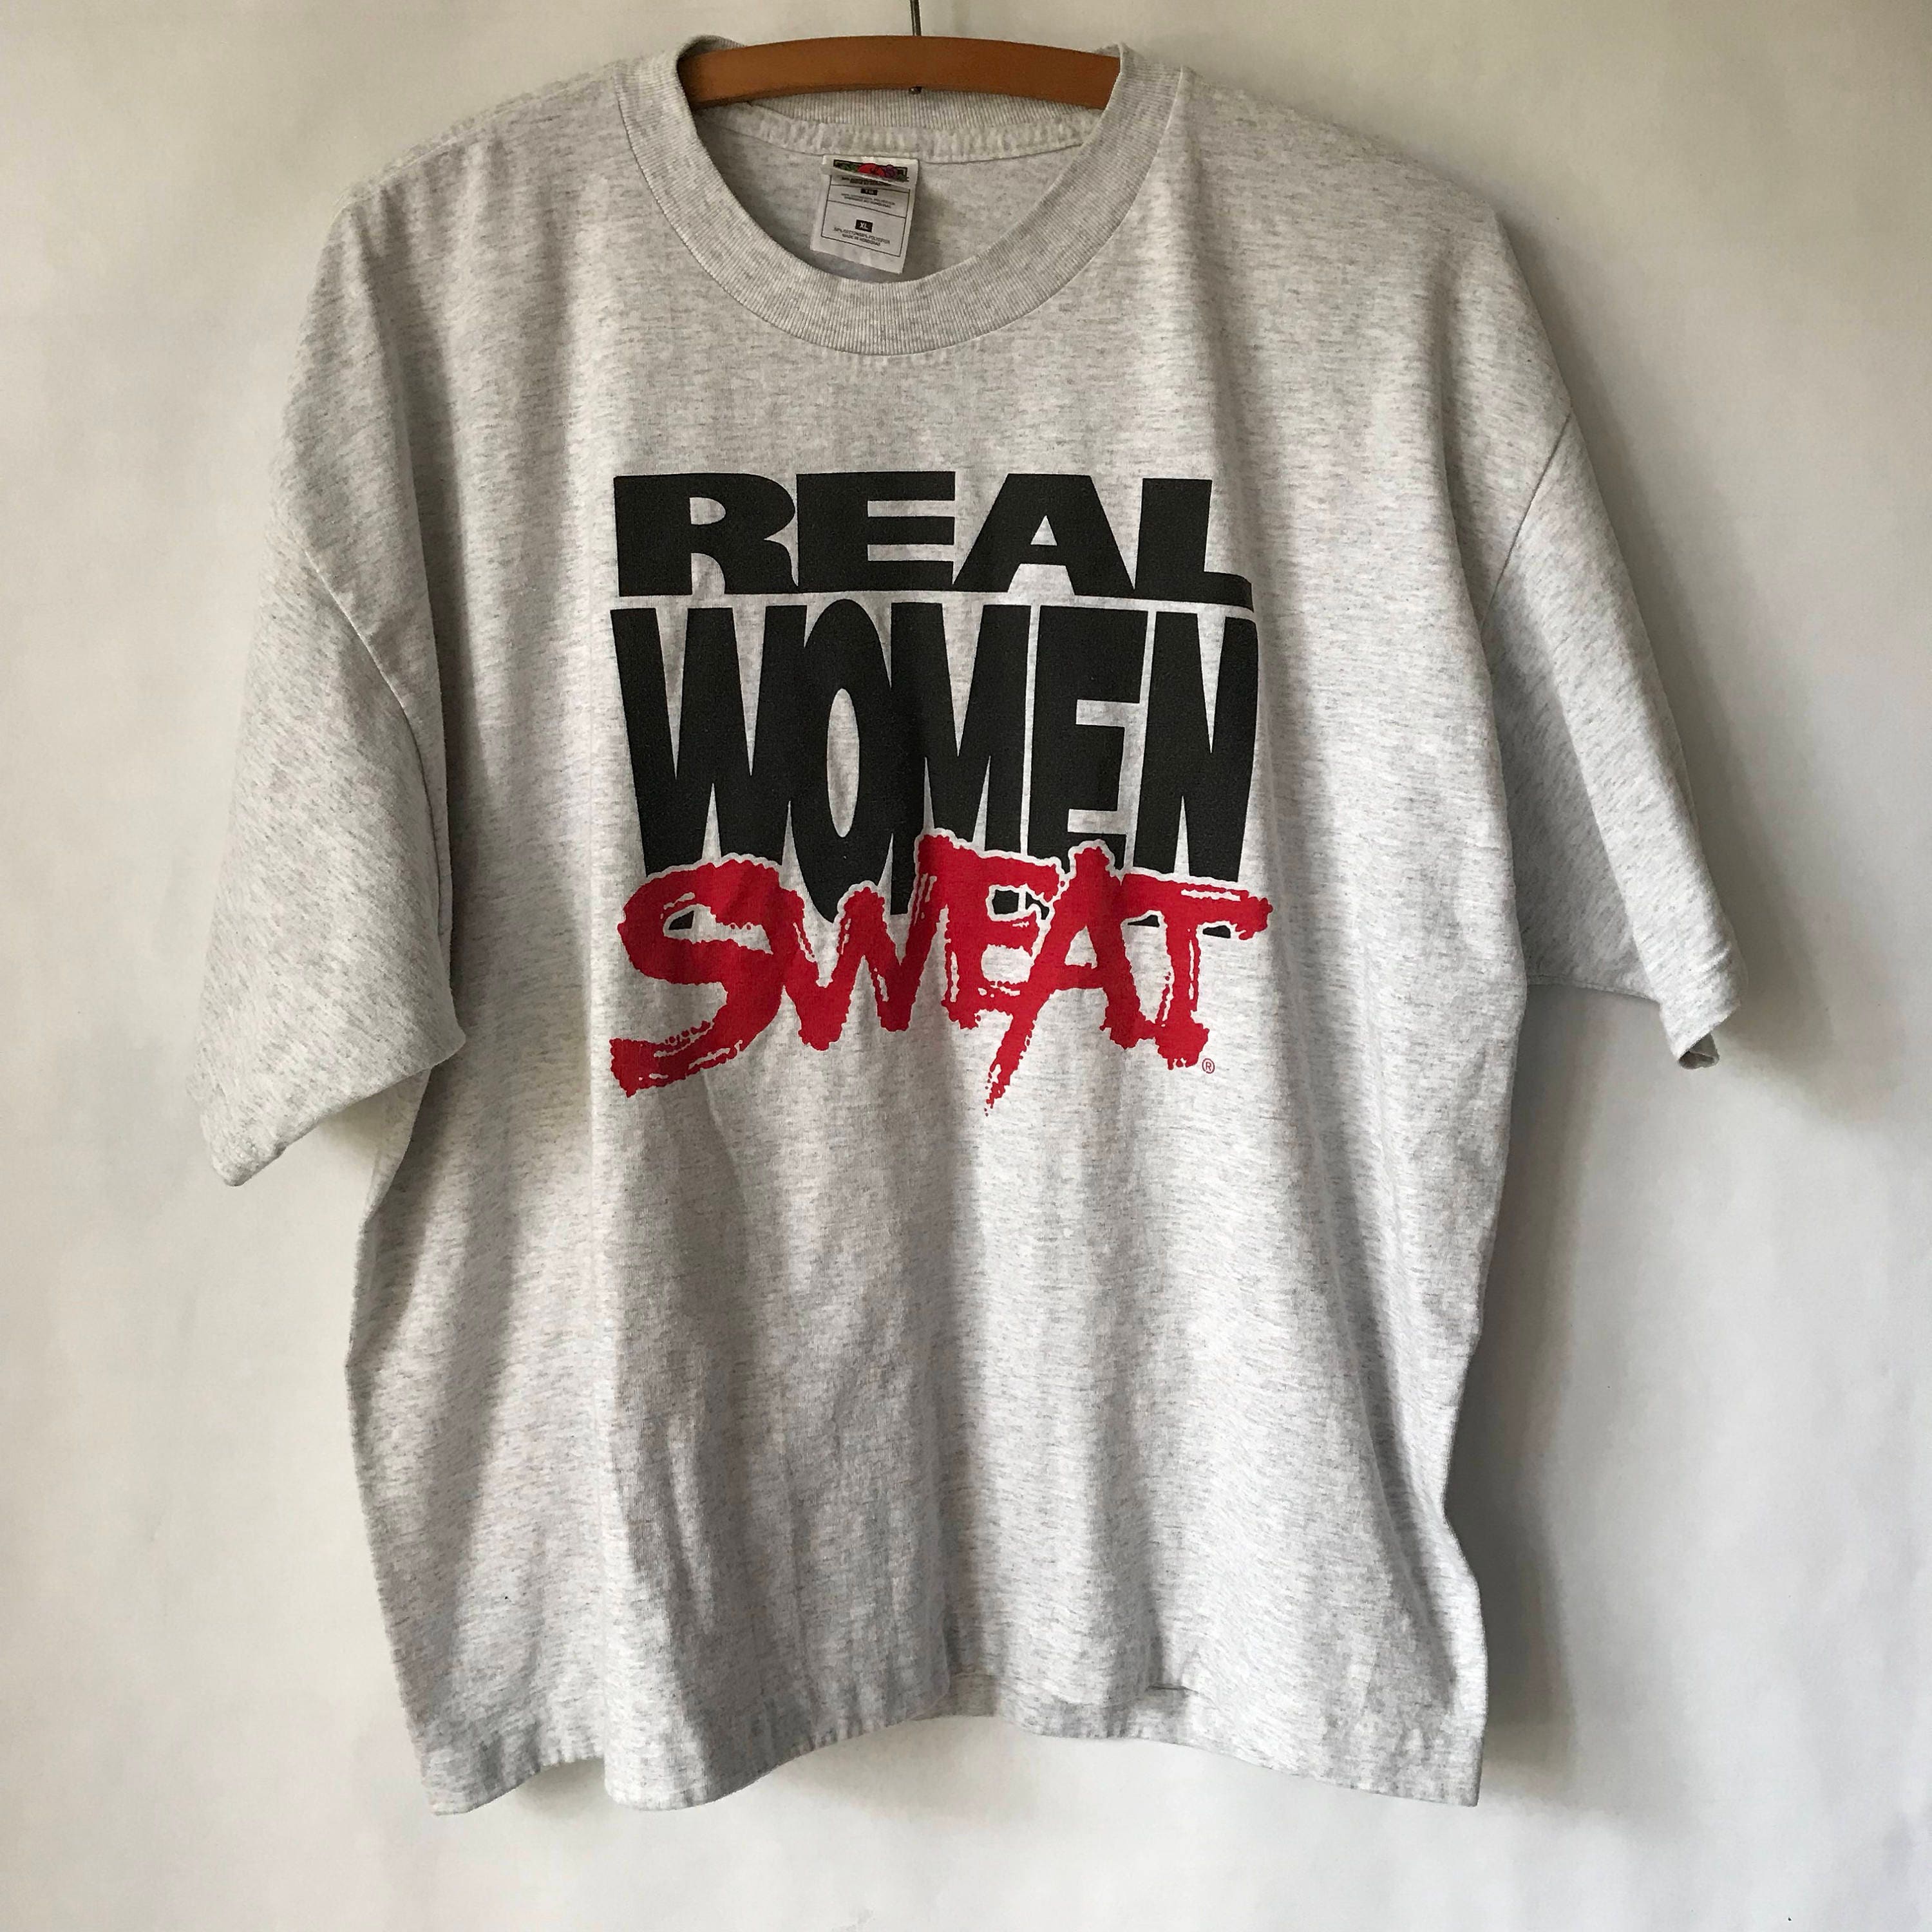 Vintage Gray Tee Vintage T Shirt Real Women Sweat Workout Running